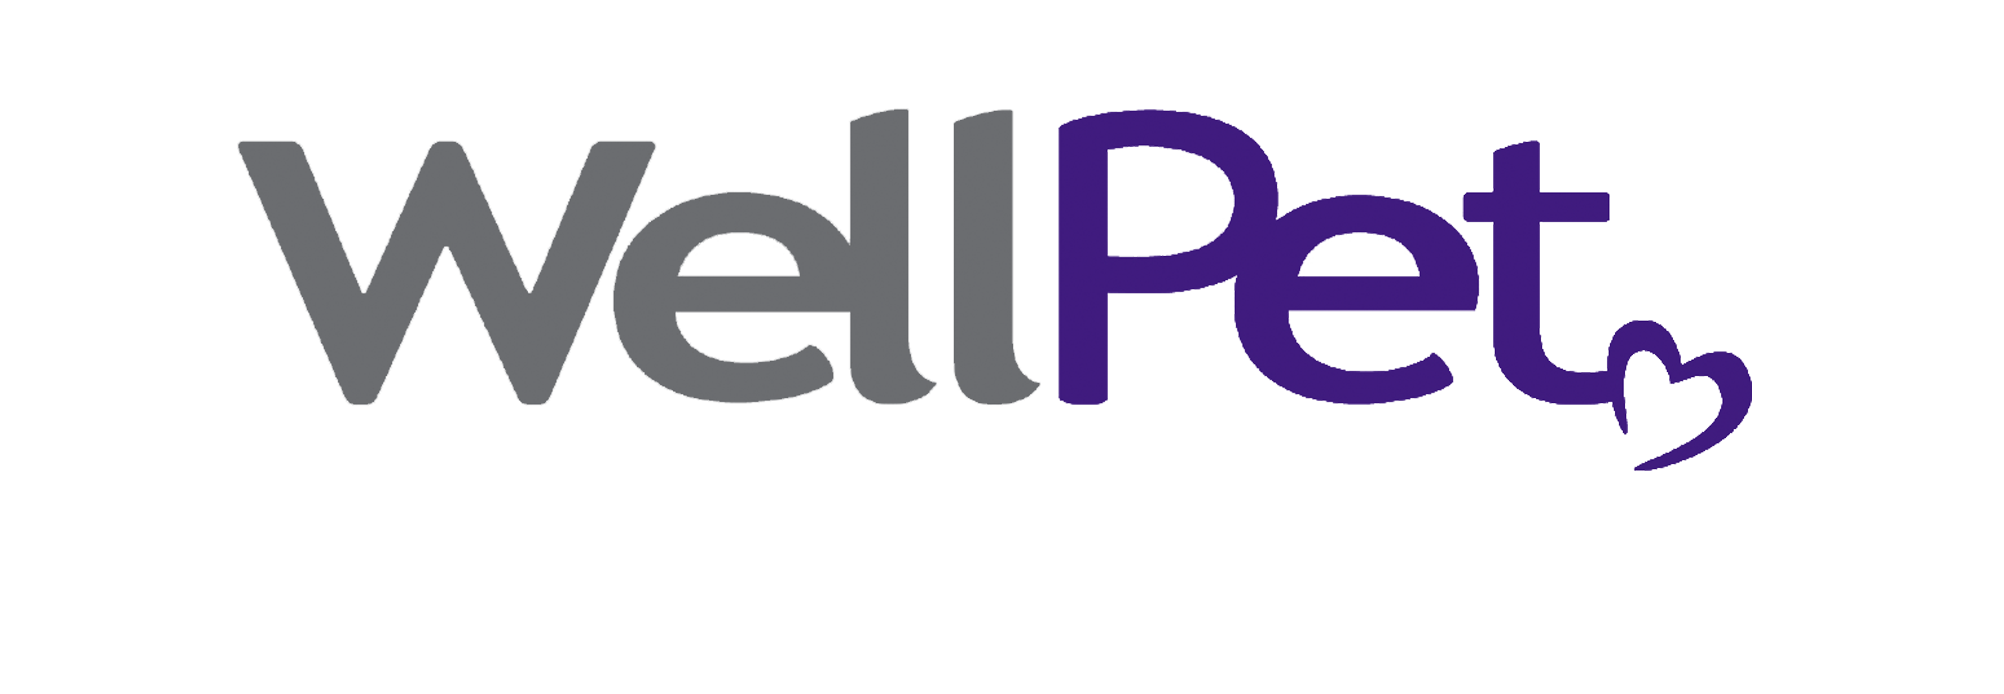 WellPet Logo